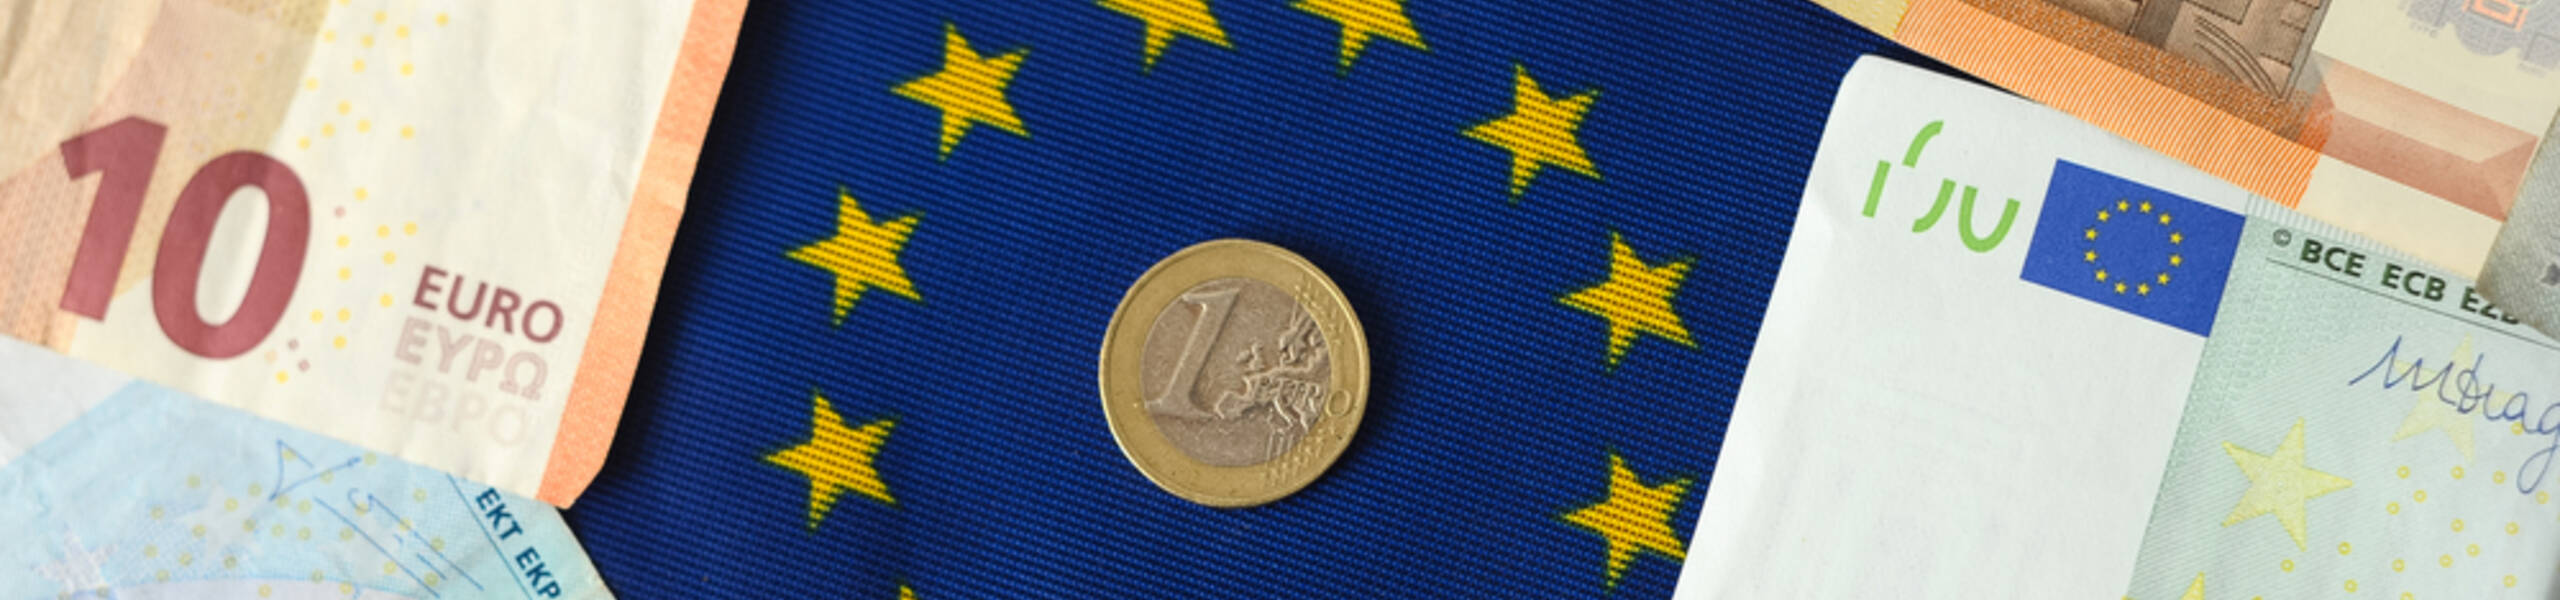 EUR/USD: euro correcting to Cloud